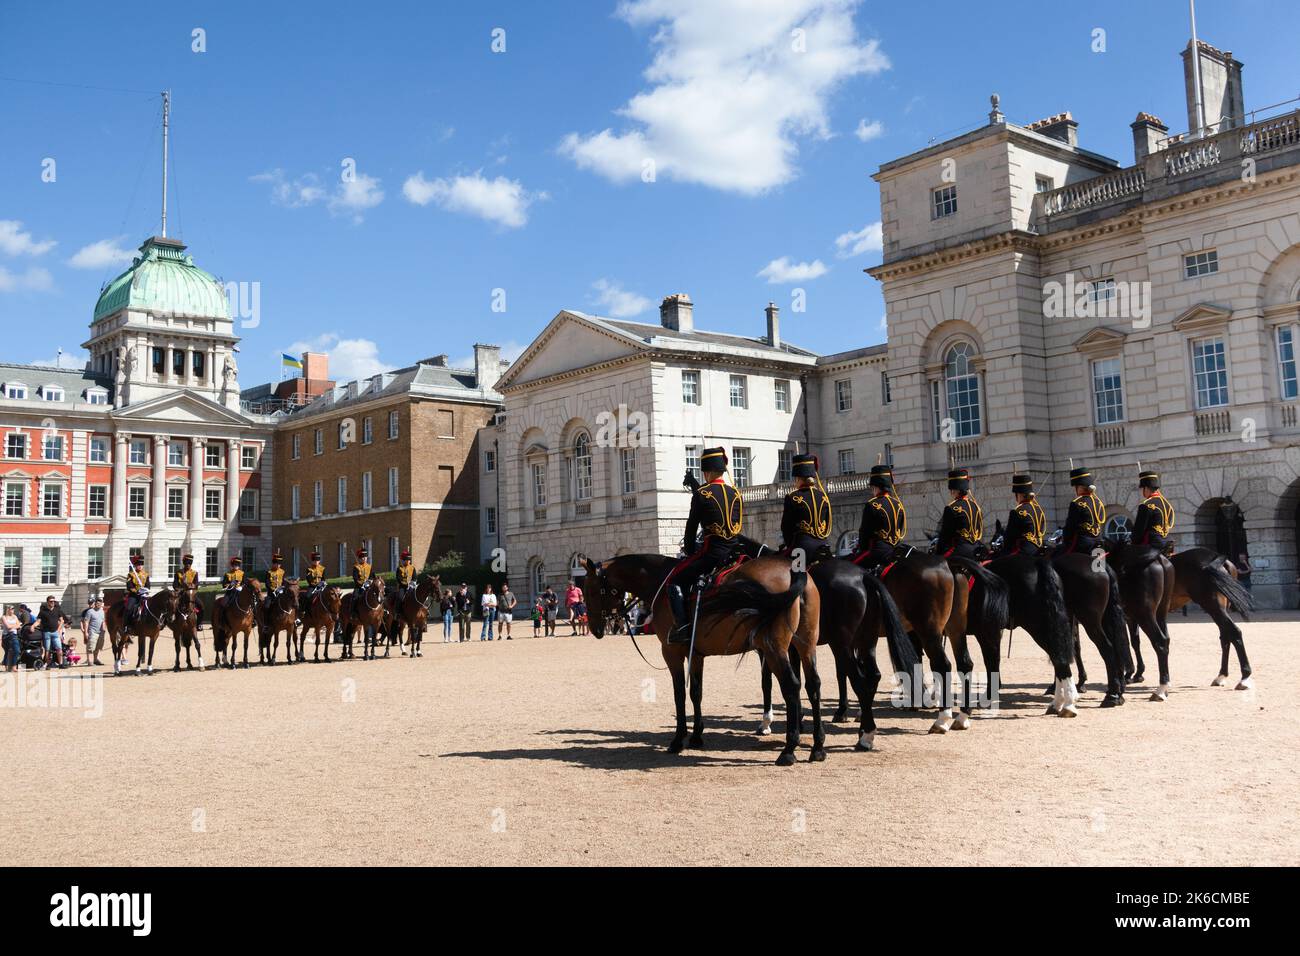 Berittene Soldaten bei der Horse Guards Parade im Zentrum Londons in England. Troopers of the King's Truppe, Royal Horse Artillery Stockfoto